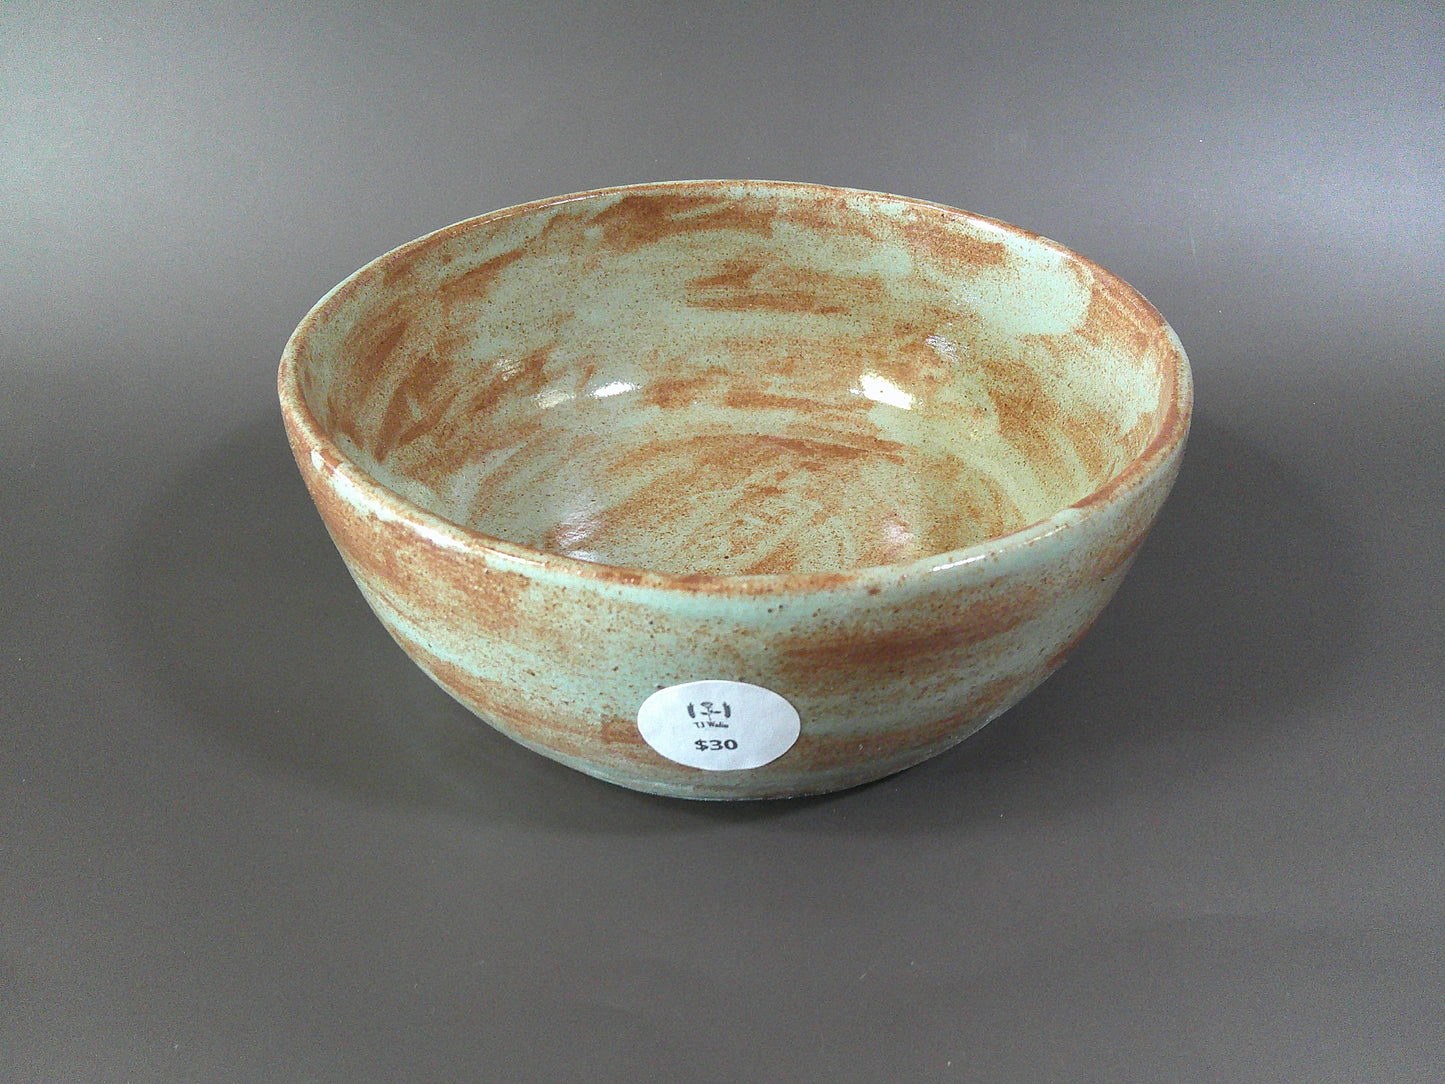 Pistachio/Brown medium size bowl $30